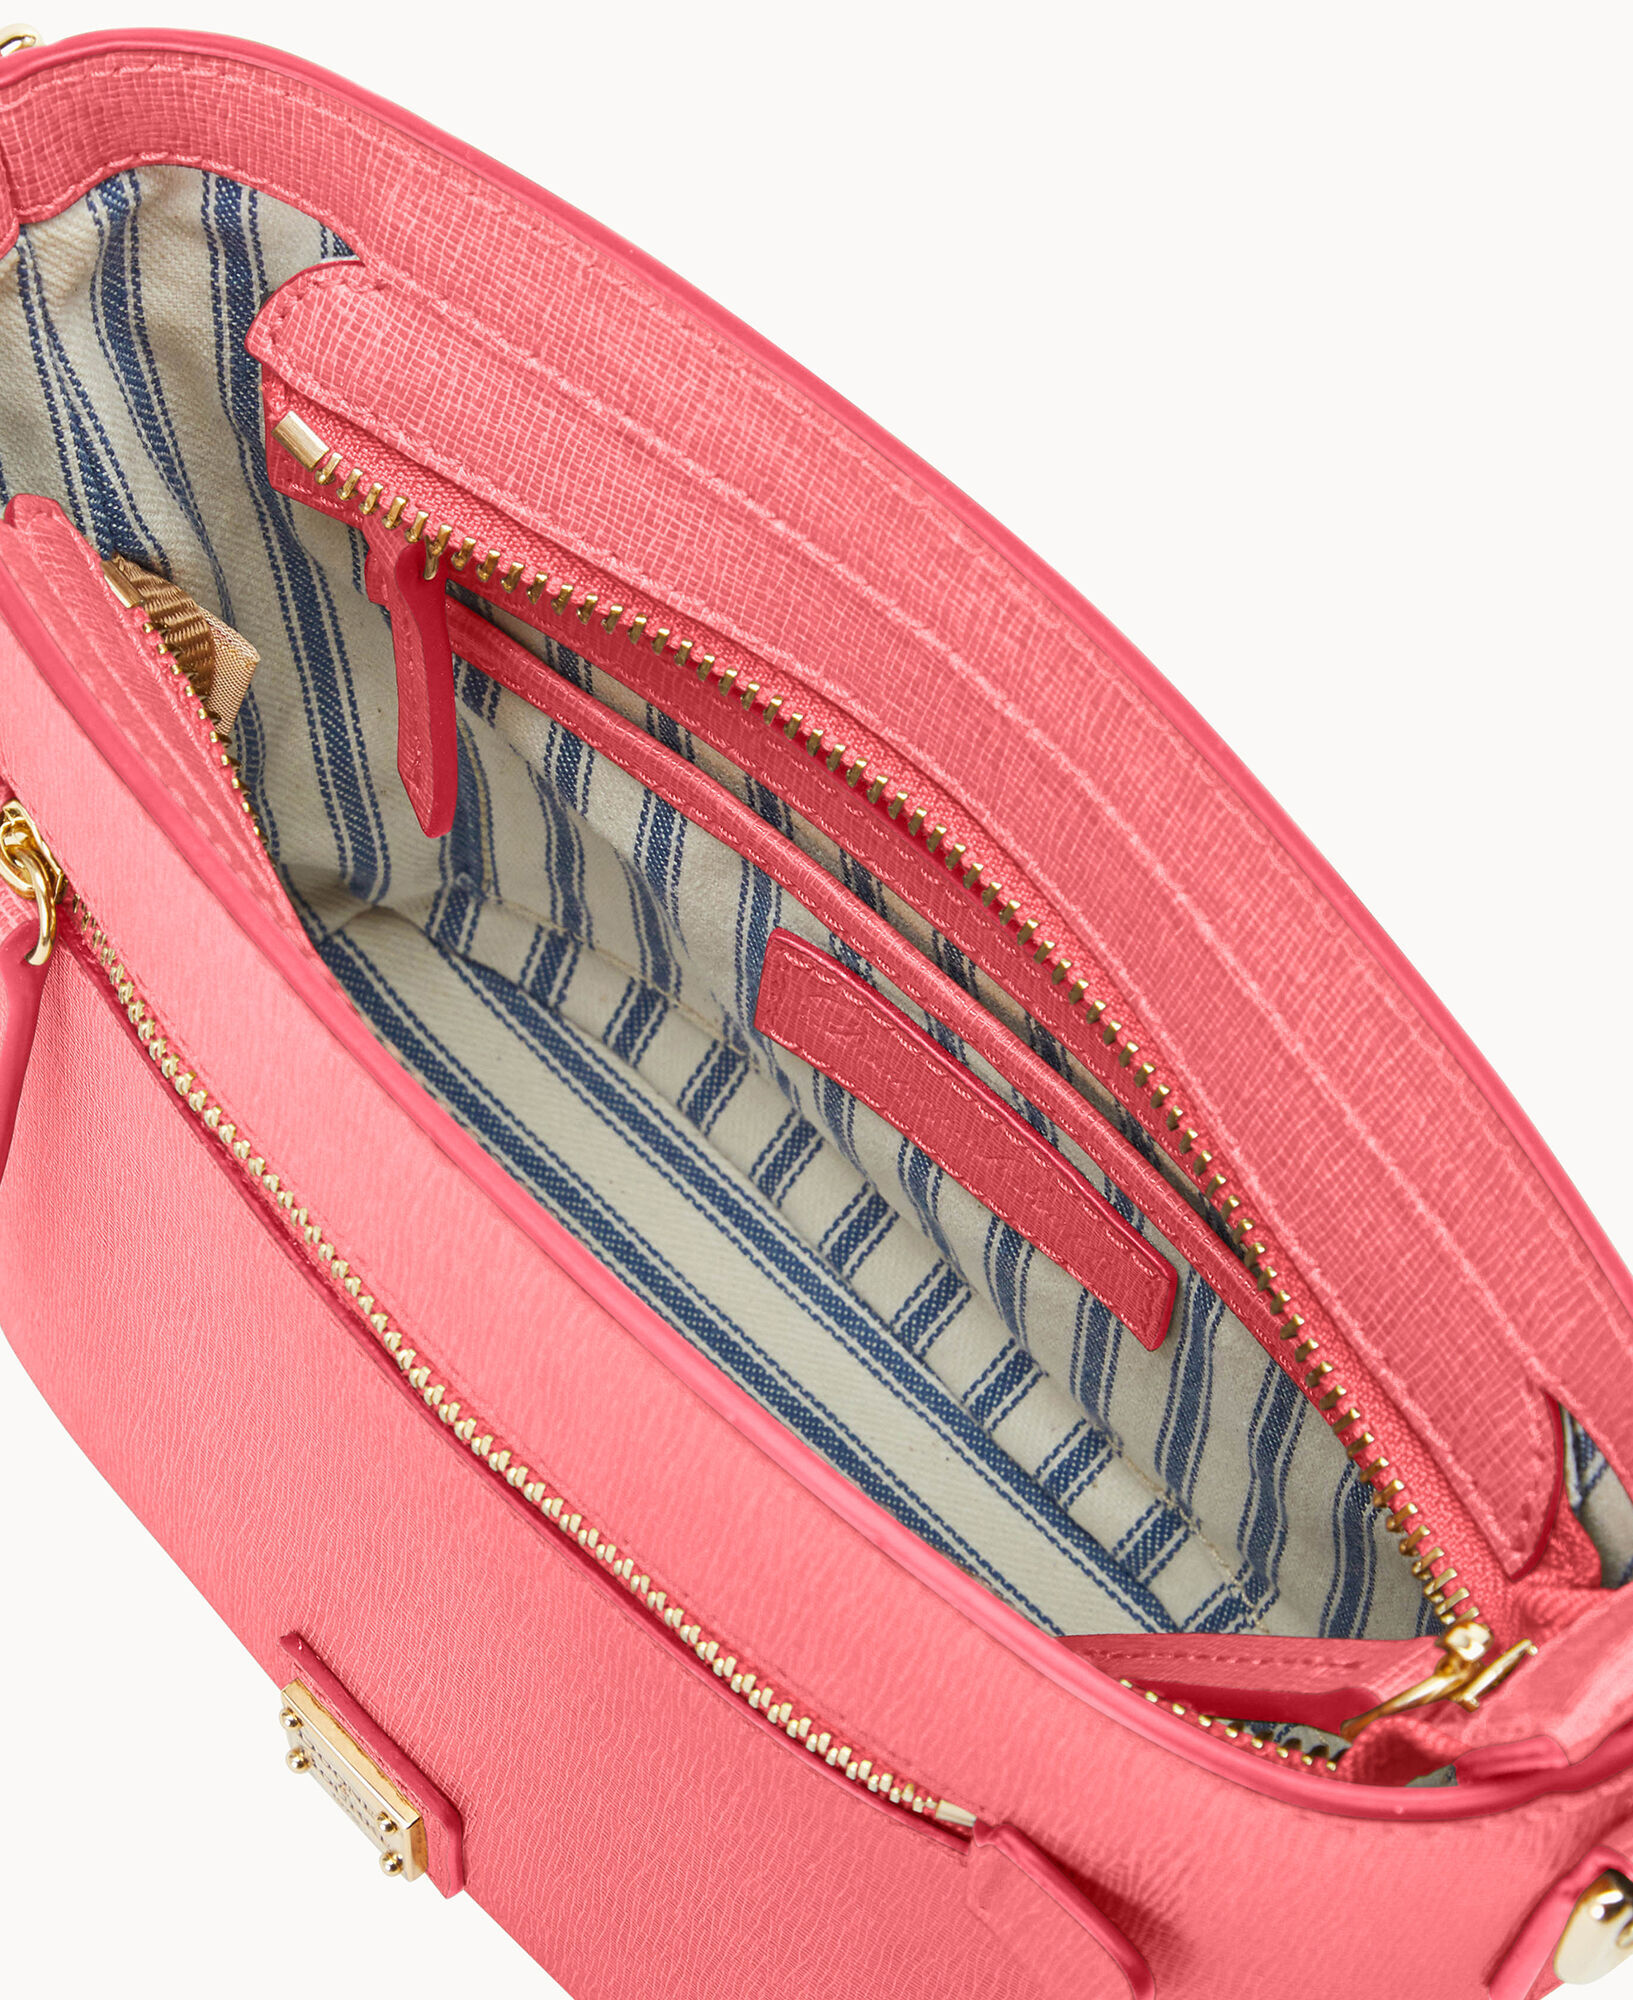 Dooney & Bourke Handbag, Saffiano Small Zip Crossbody